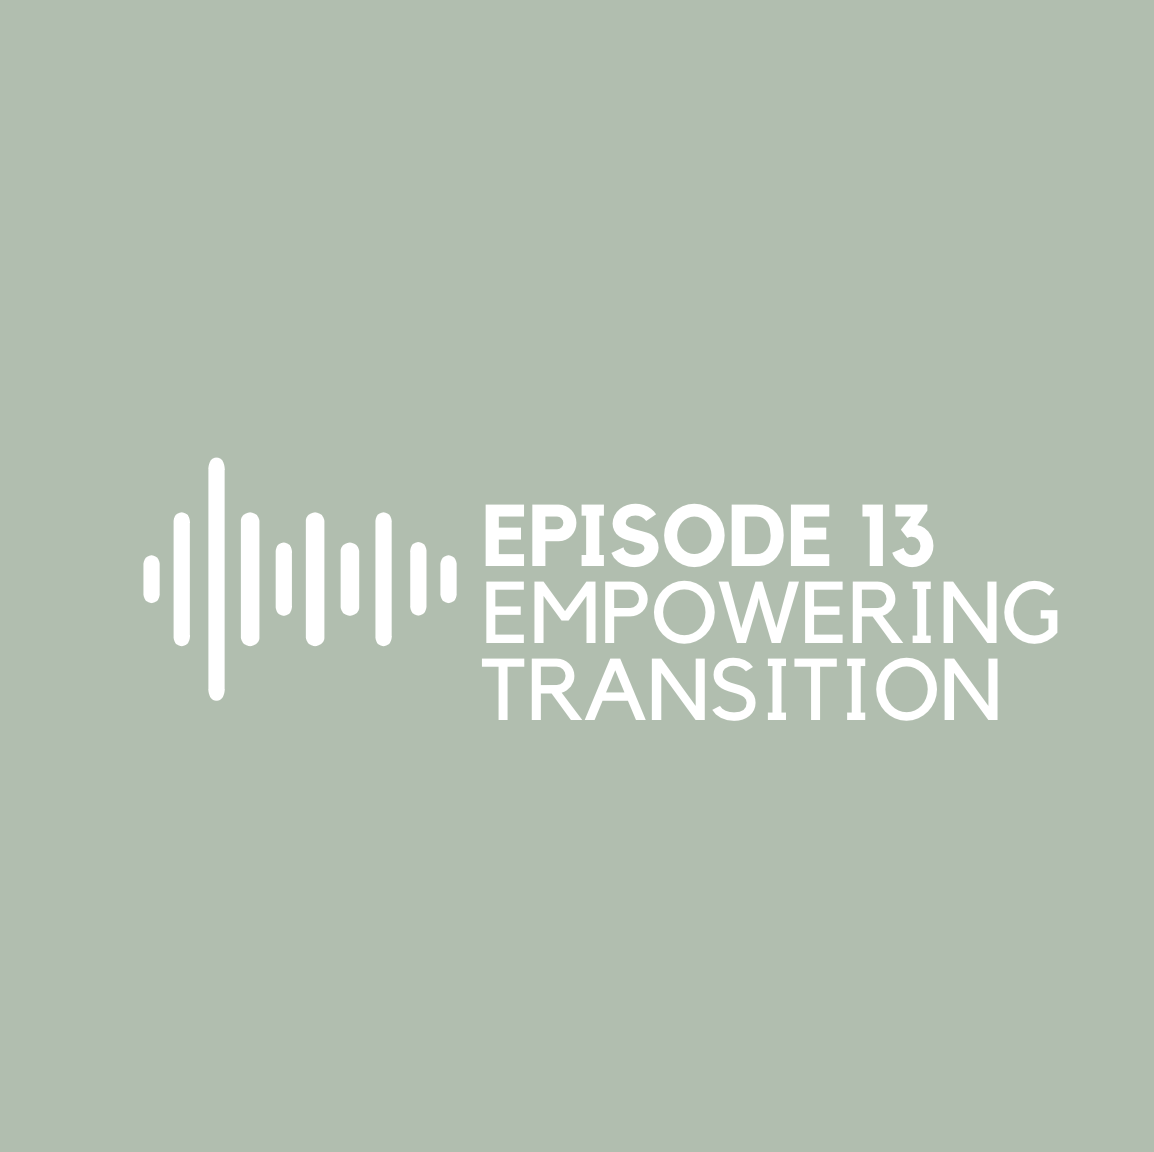 Episode 13 - Empowering Transition